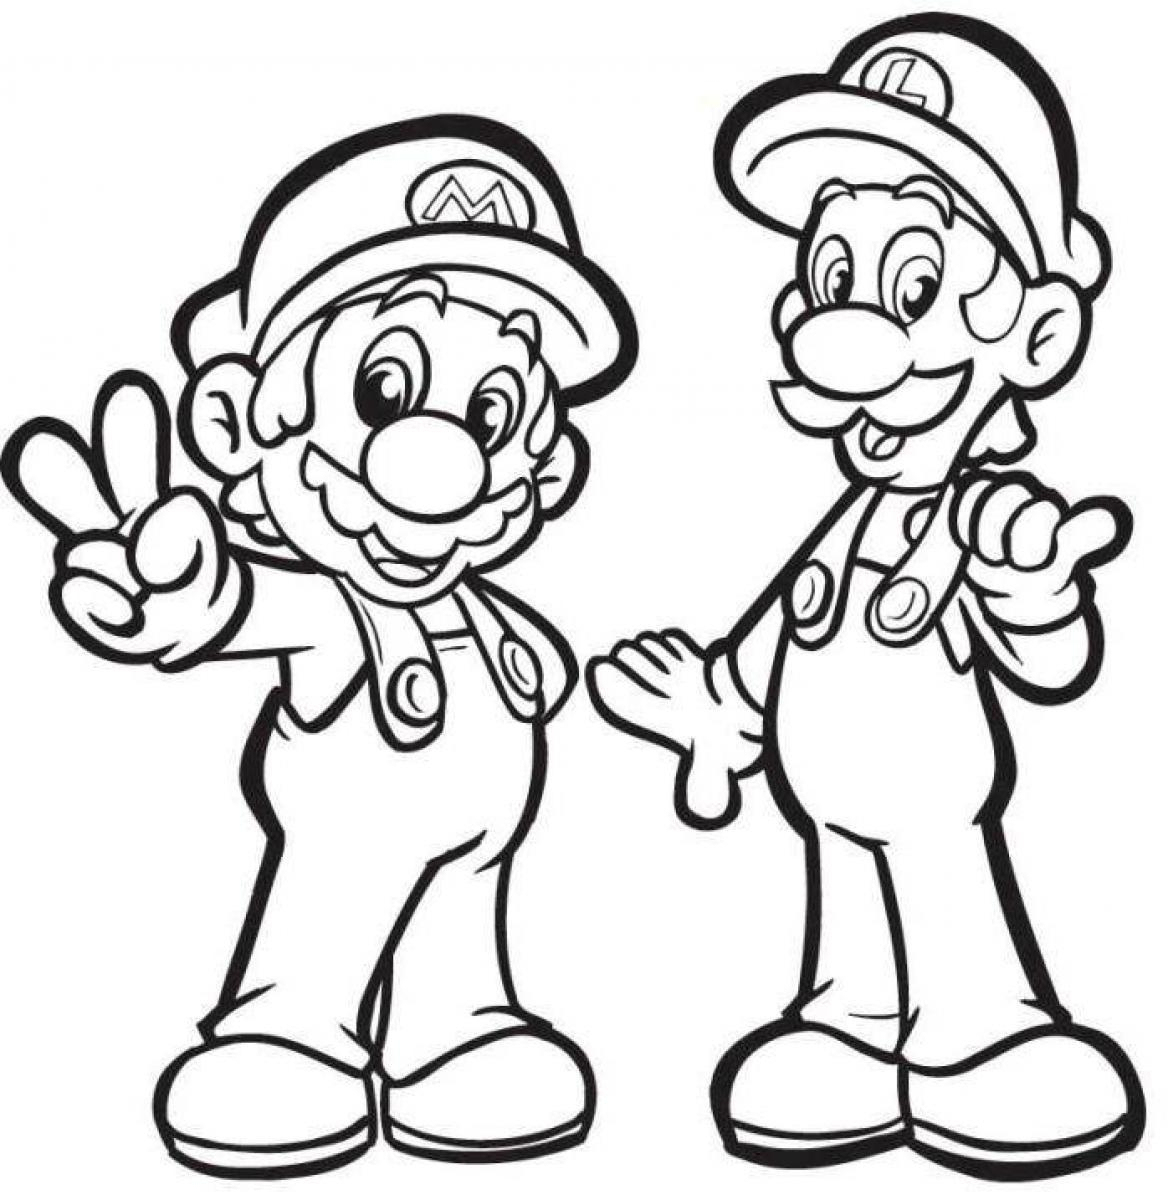 Mario And Luigi Drawing At Getdrawings | Free Download tout Coloriage Mario Et Luigi